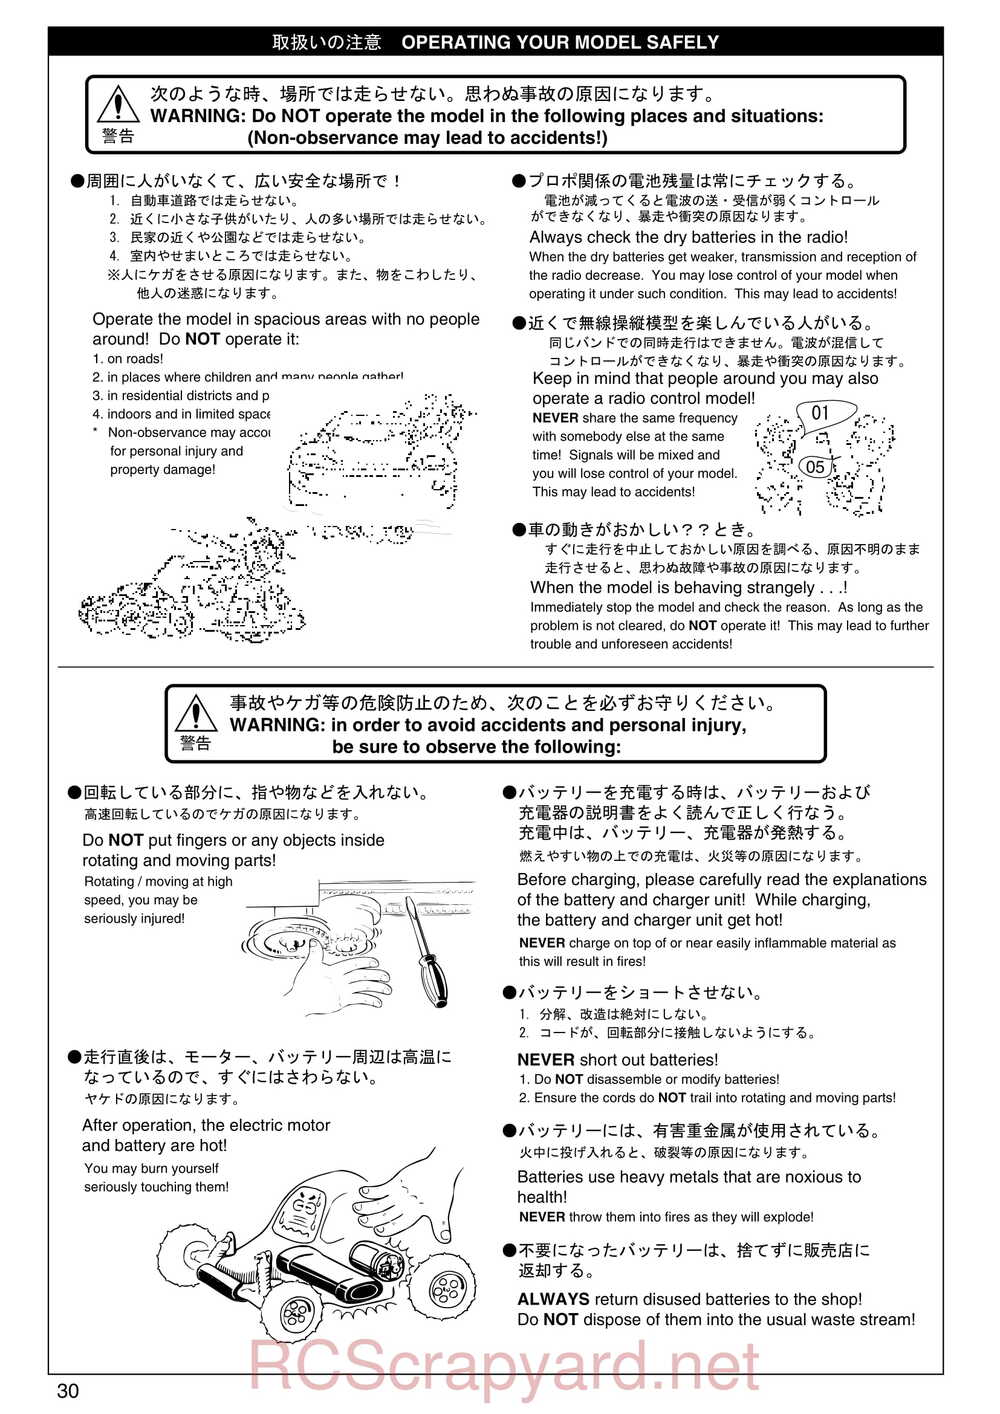 Kyosho - 30521b - Twin-Force - Manual - Page 30